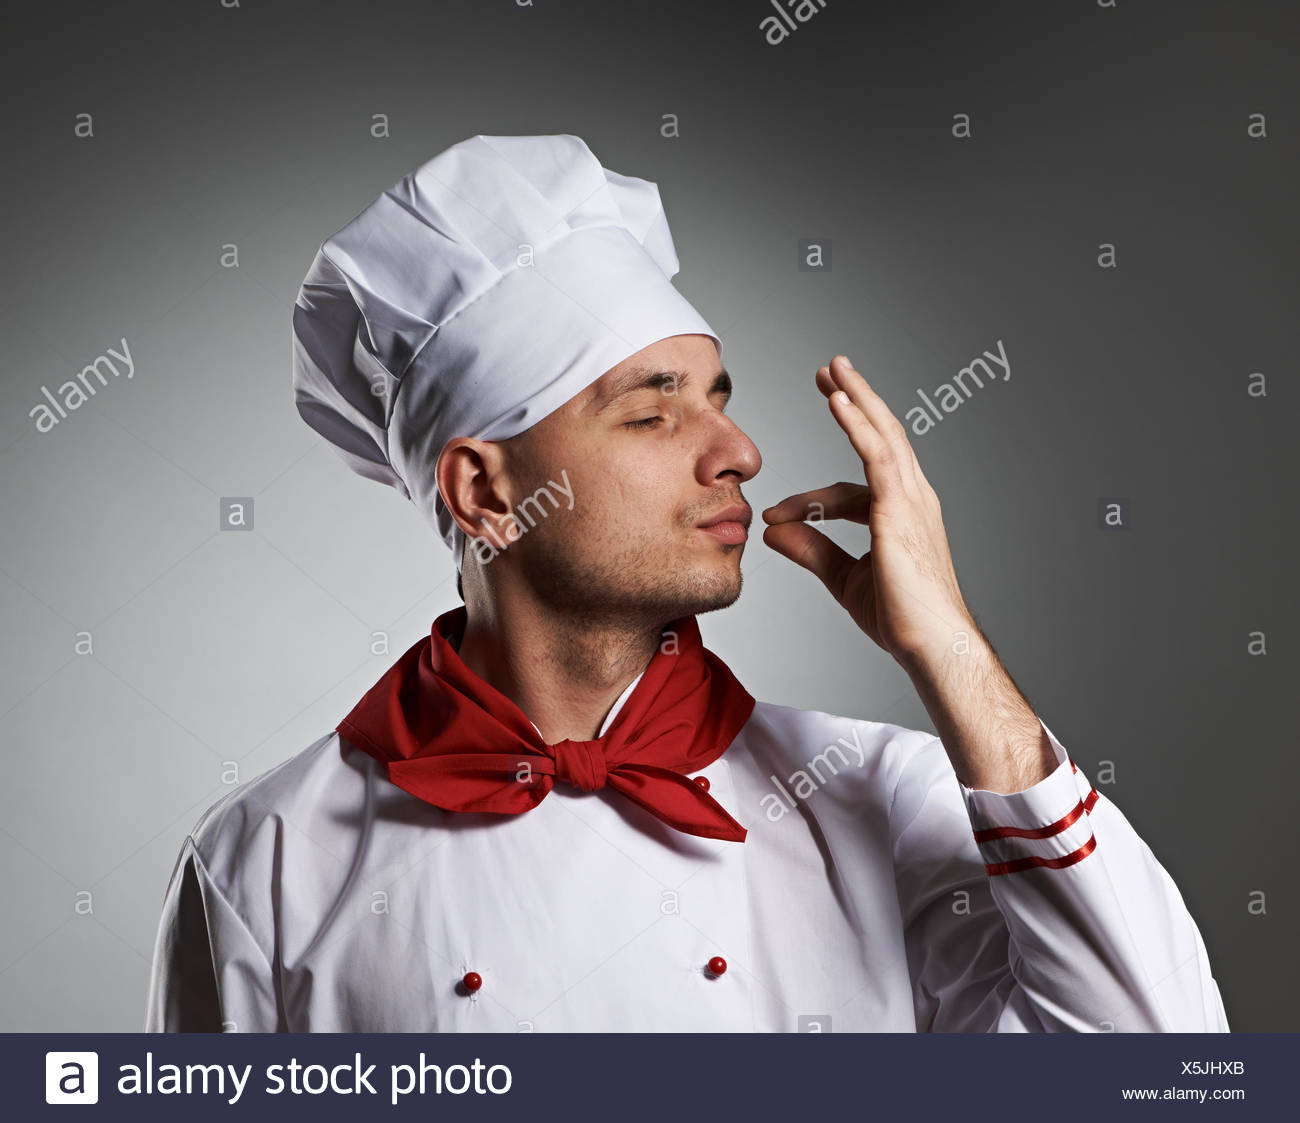 male-chef-kissing-fingers-X5JHXB.jpg